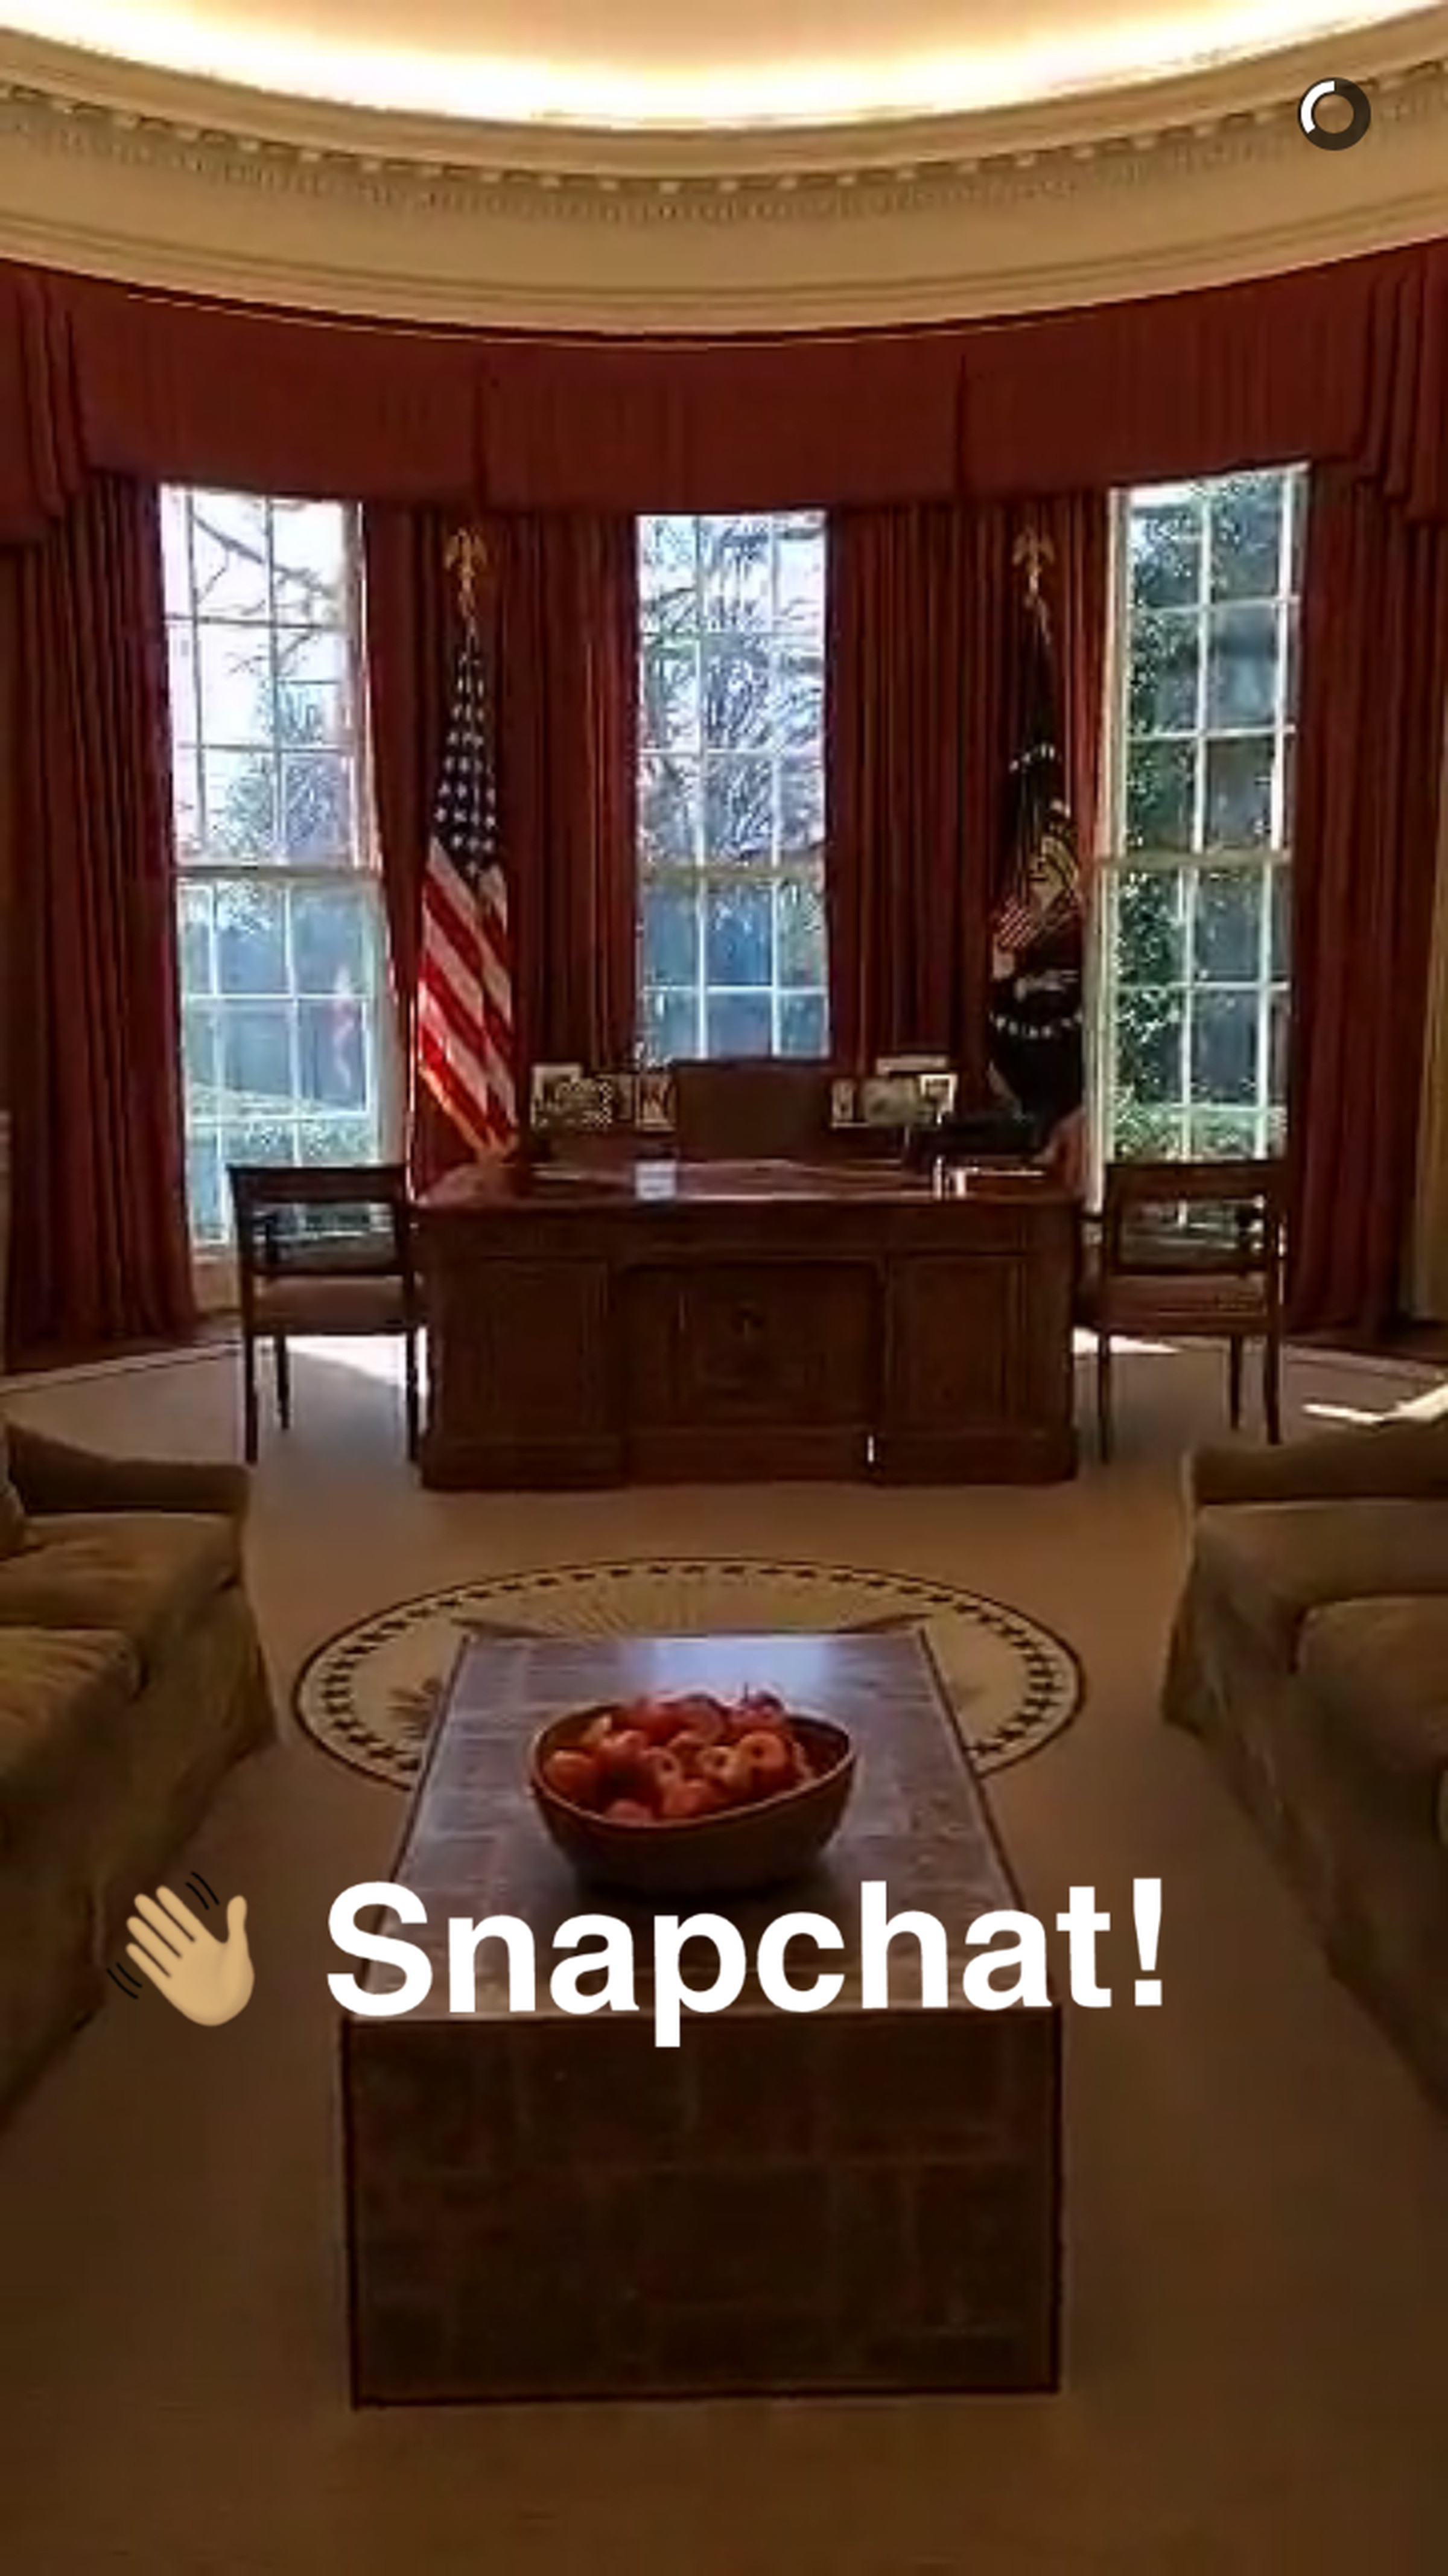 White House Snapchat